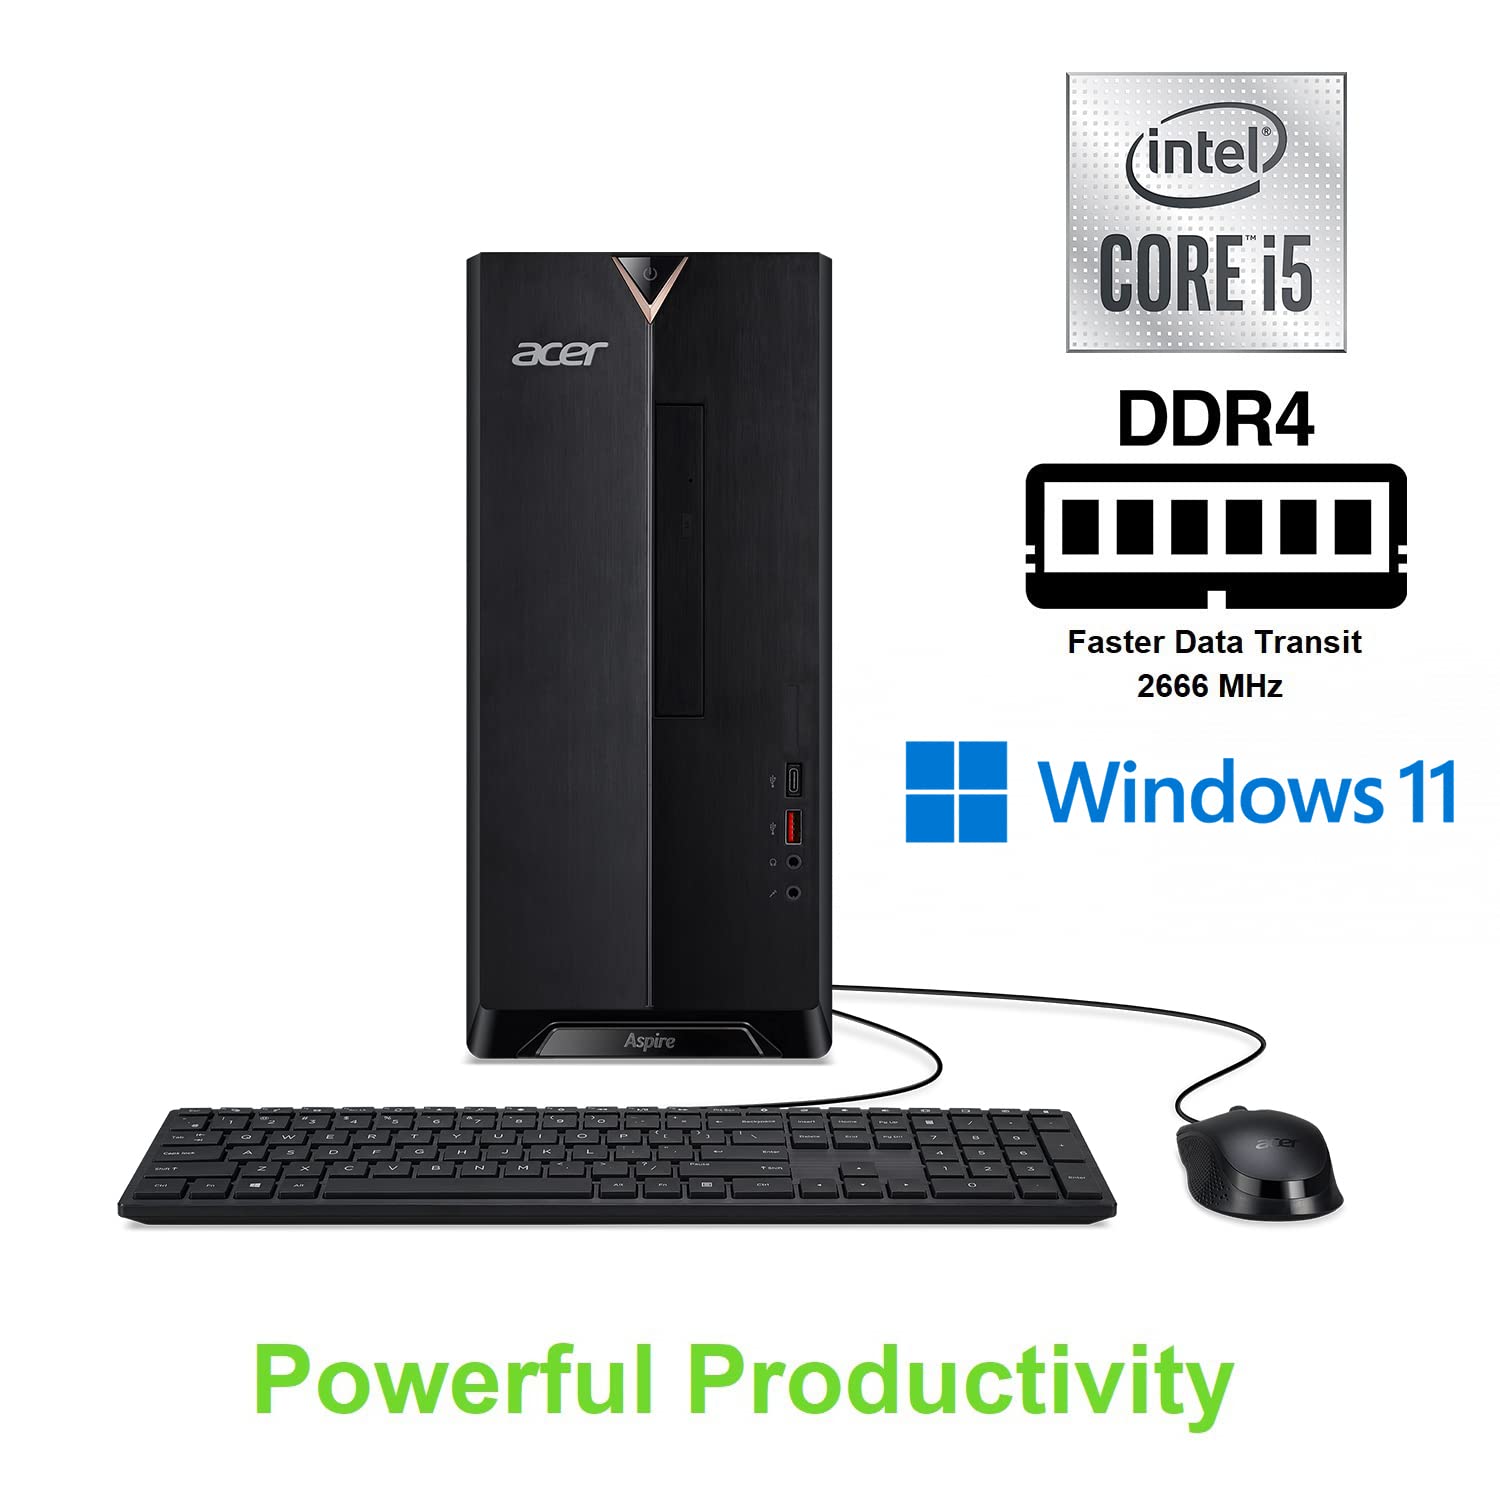 Acer Aspire TC-1660-UA19 Desktop | 10th Gen Intel Core i5-10400 6-Core Processor | 12GB 2666MHz DDR4 | 512GB NVMe M.2 SSD | 8X DVD | Intel Wireless Wi-Fi 6 | Bluetooth 5.2 | Windows 11 Home